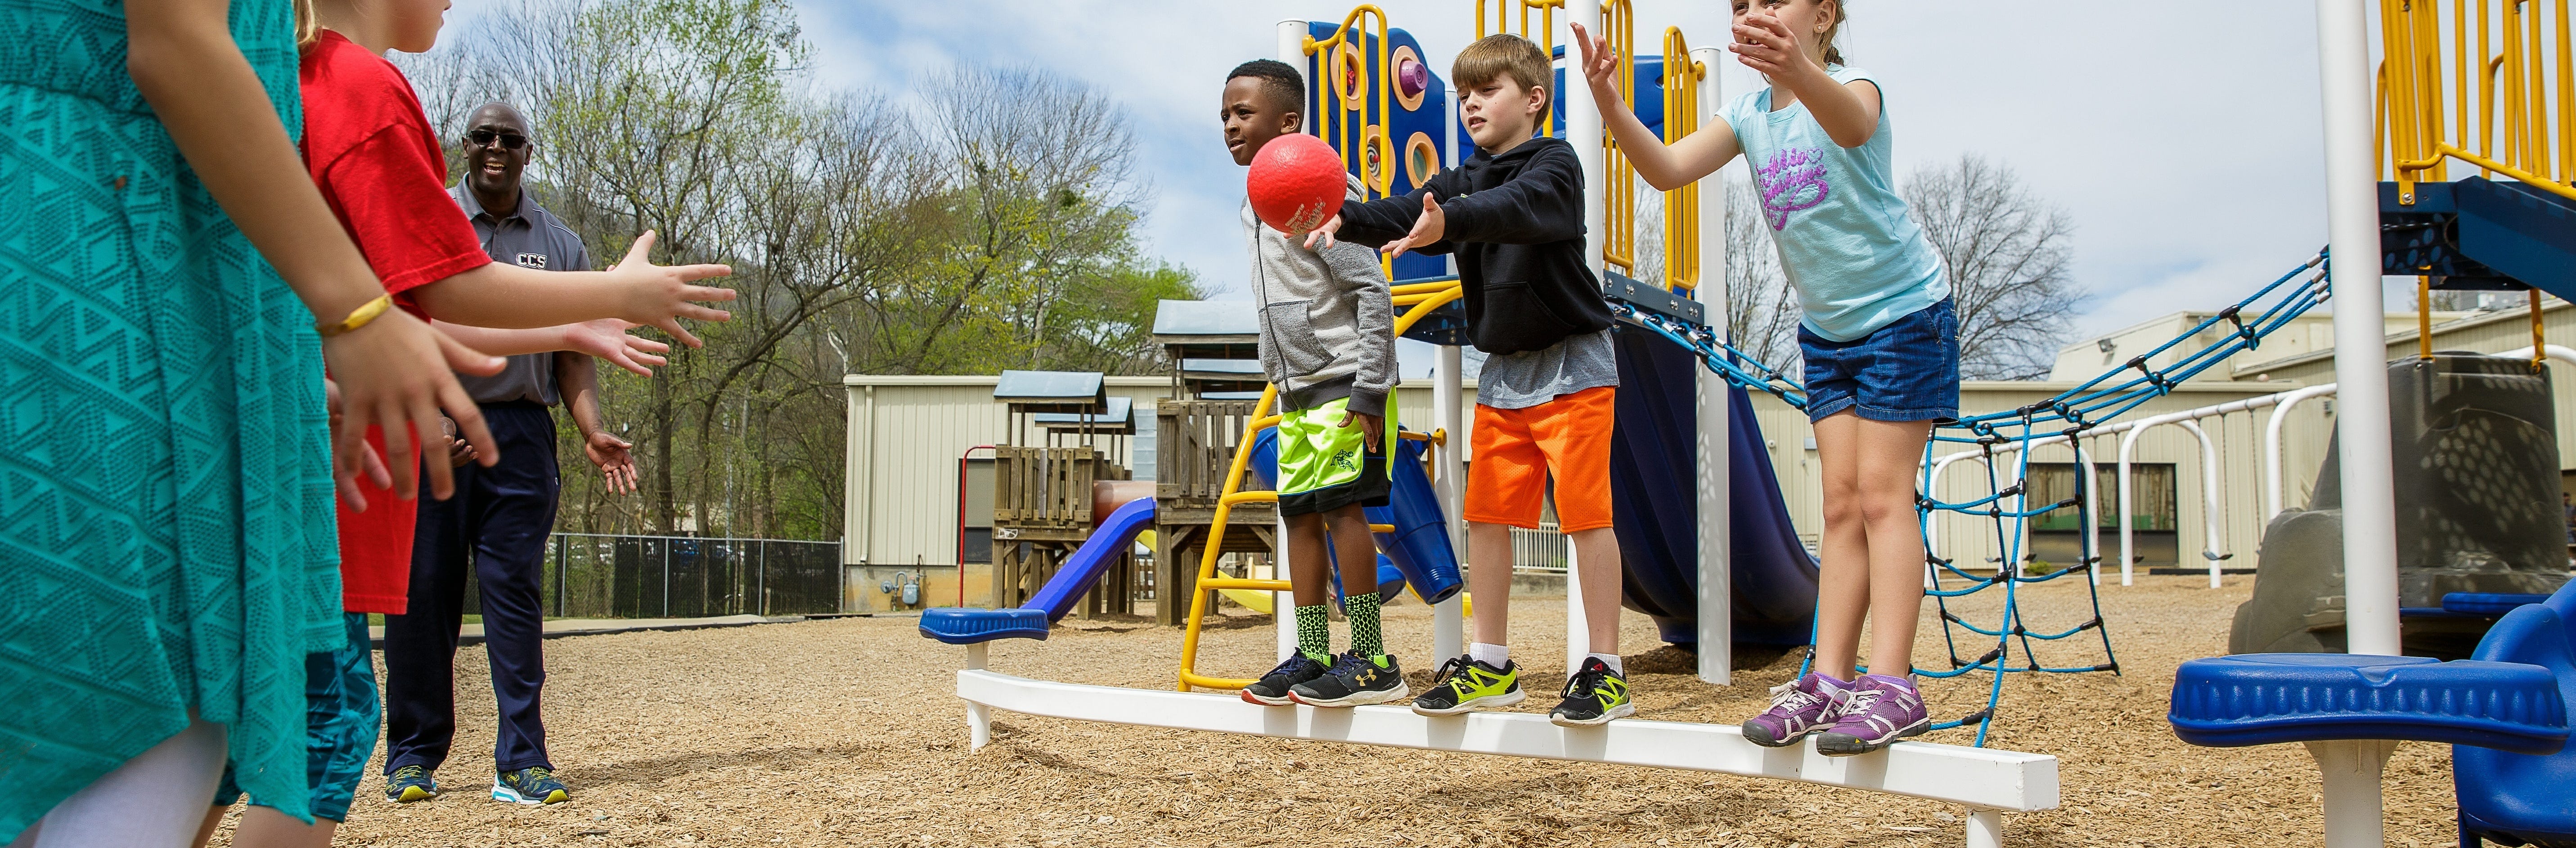 School Playgrounds 101: Balancing